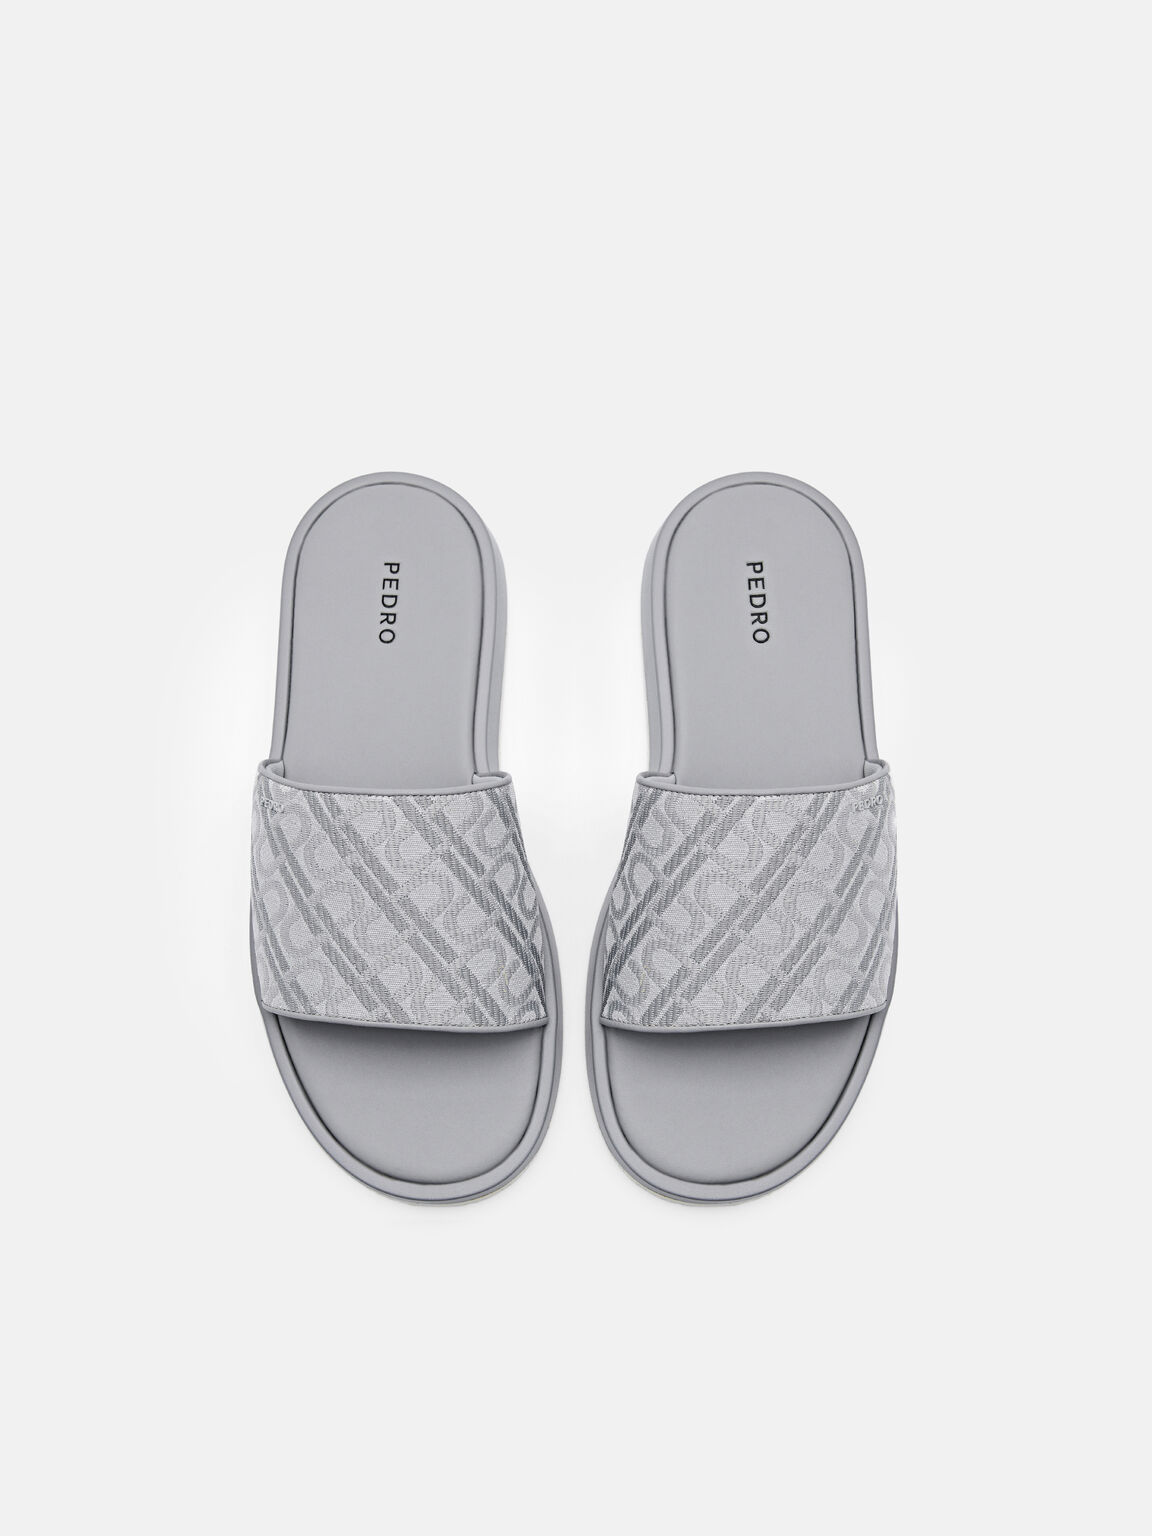 PEDRO Icon Jacquard Slide Sandals, Grey